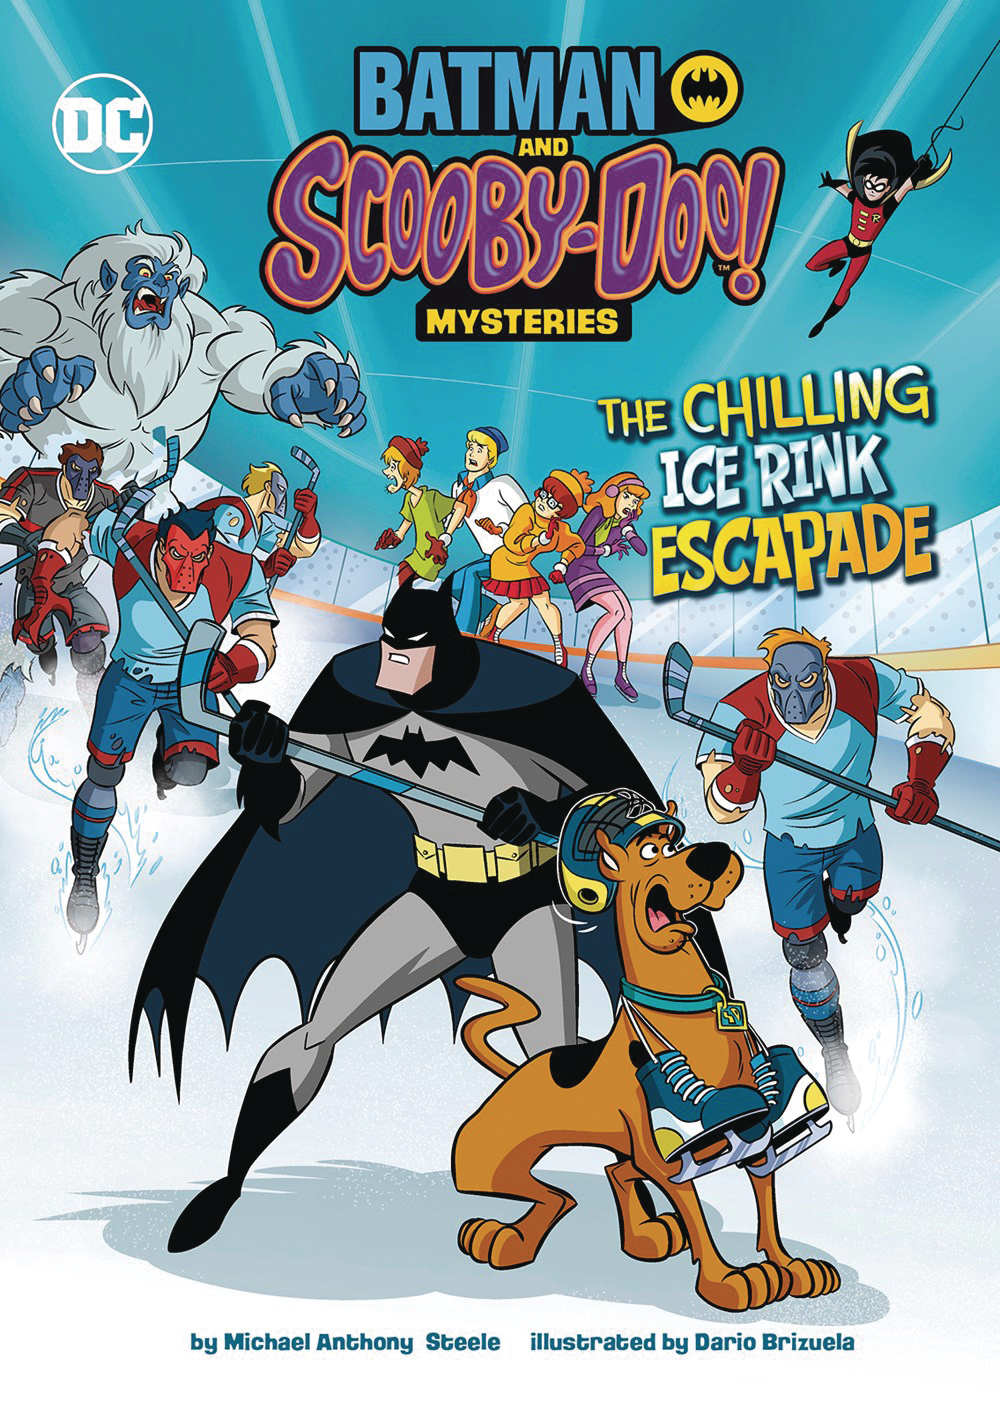 Batman Scooby Doo Mysteries #1 Chilling Ice Rink Escapade